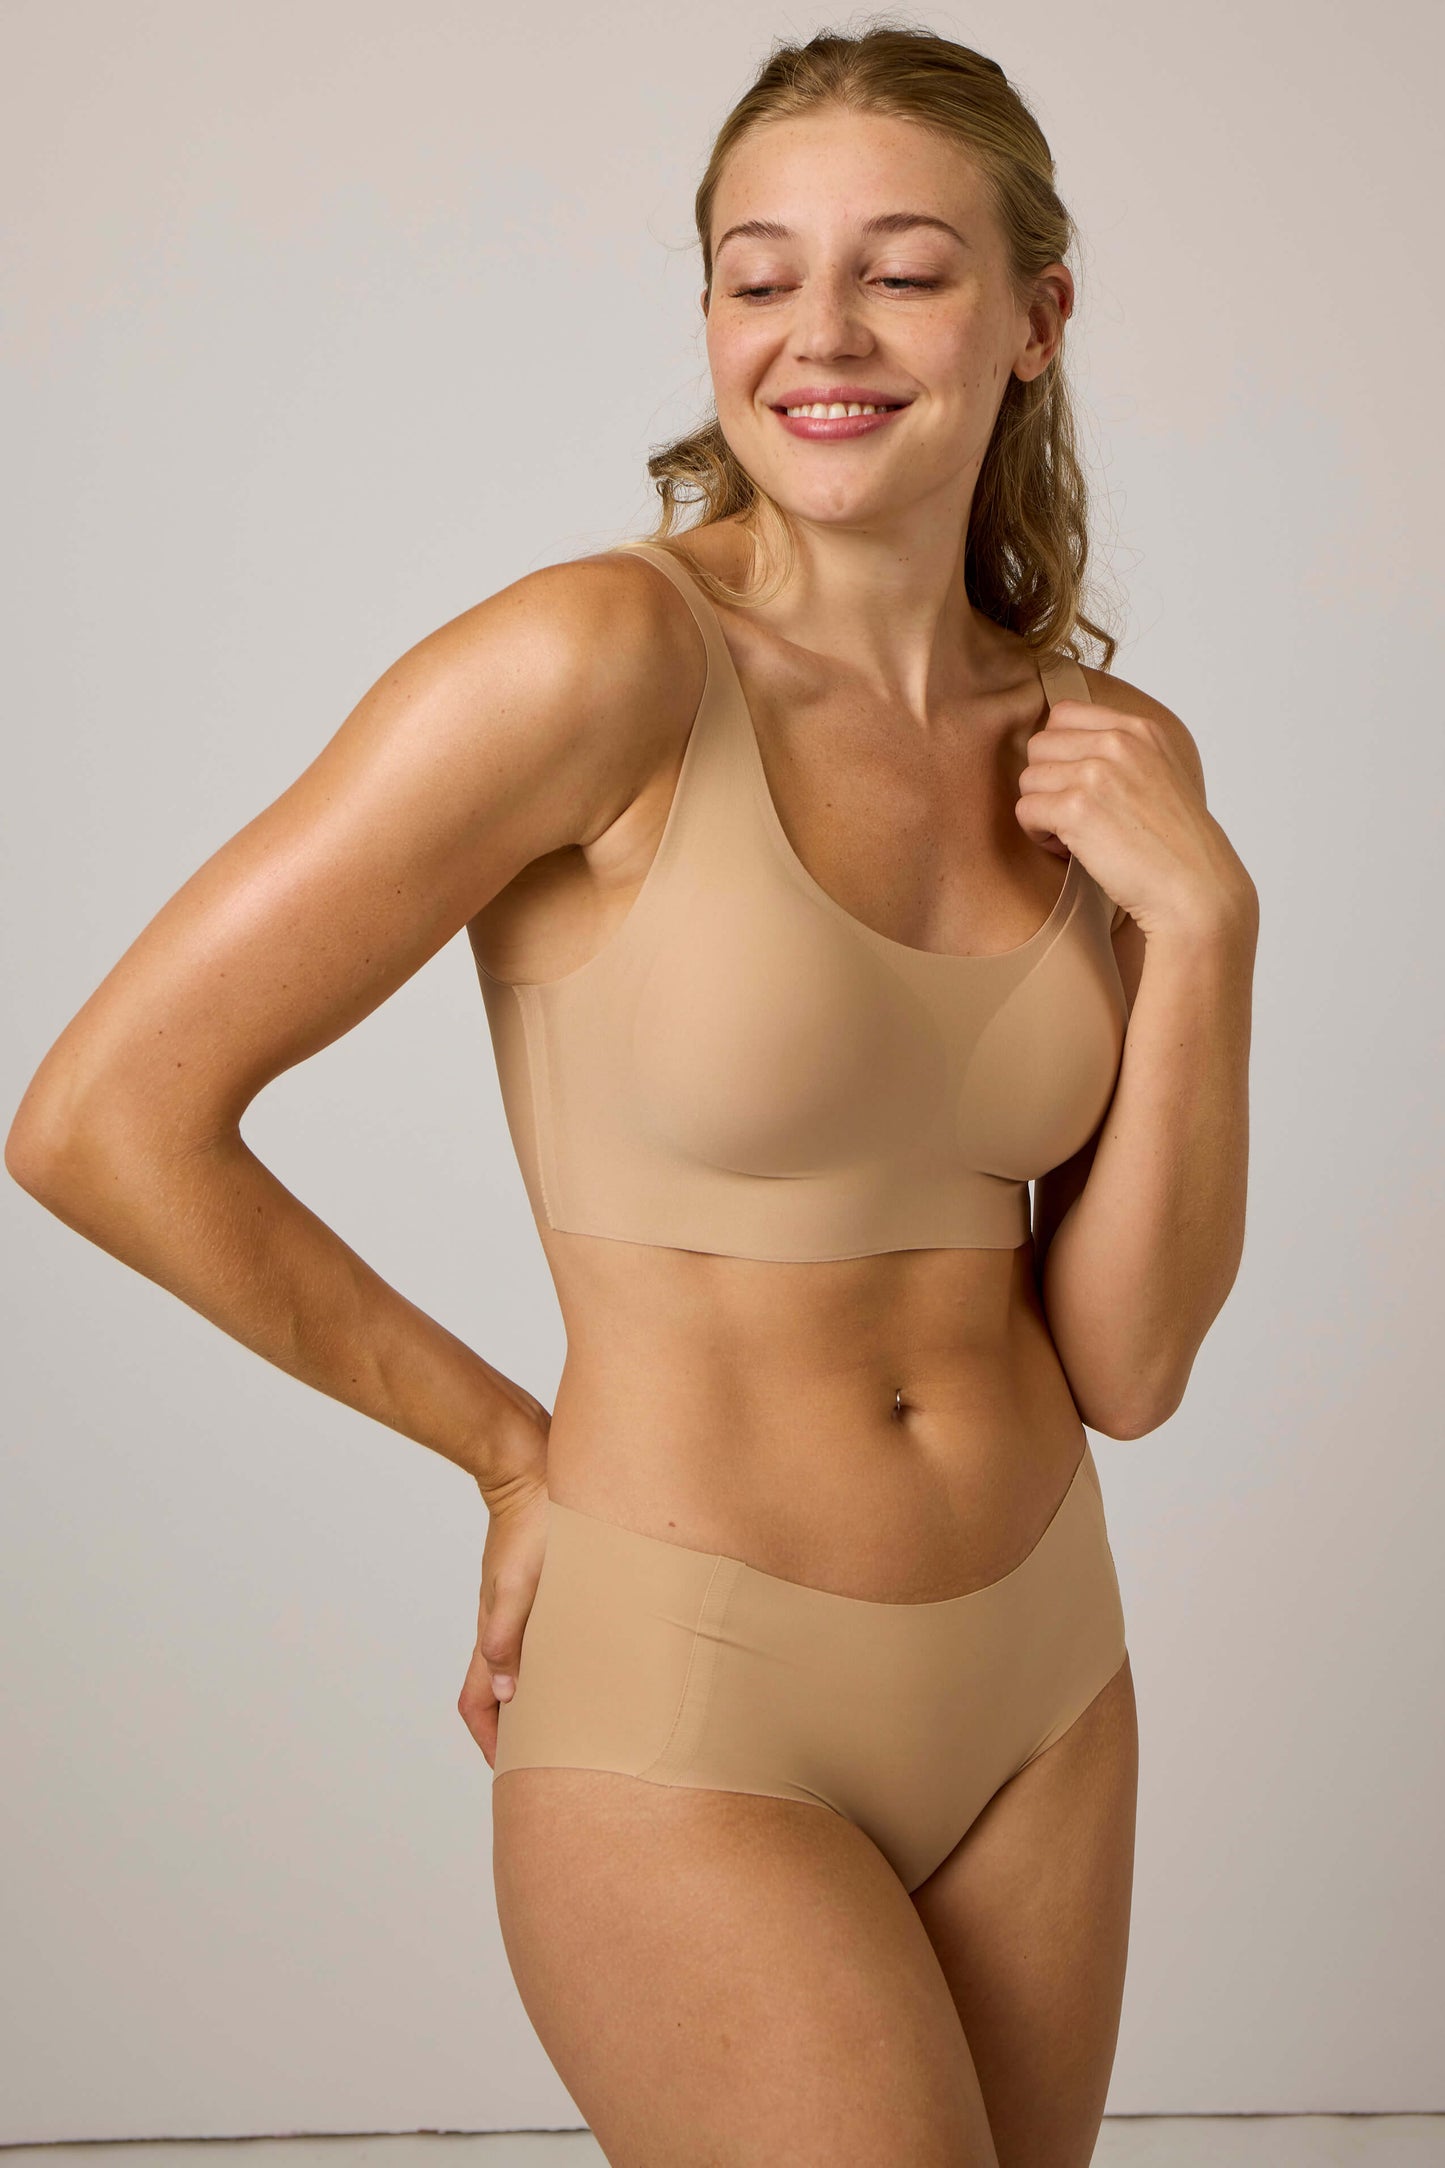 Woman wearing tan bra and matching underwear